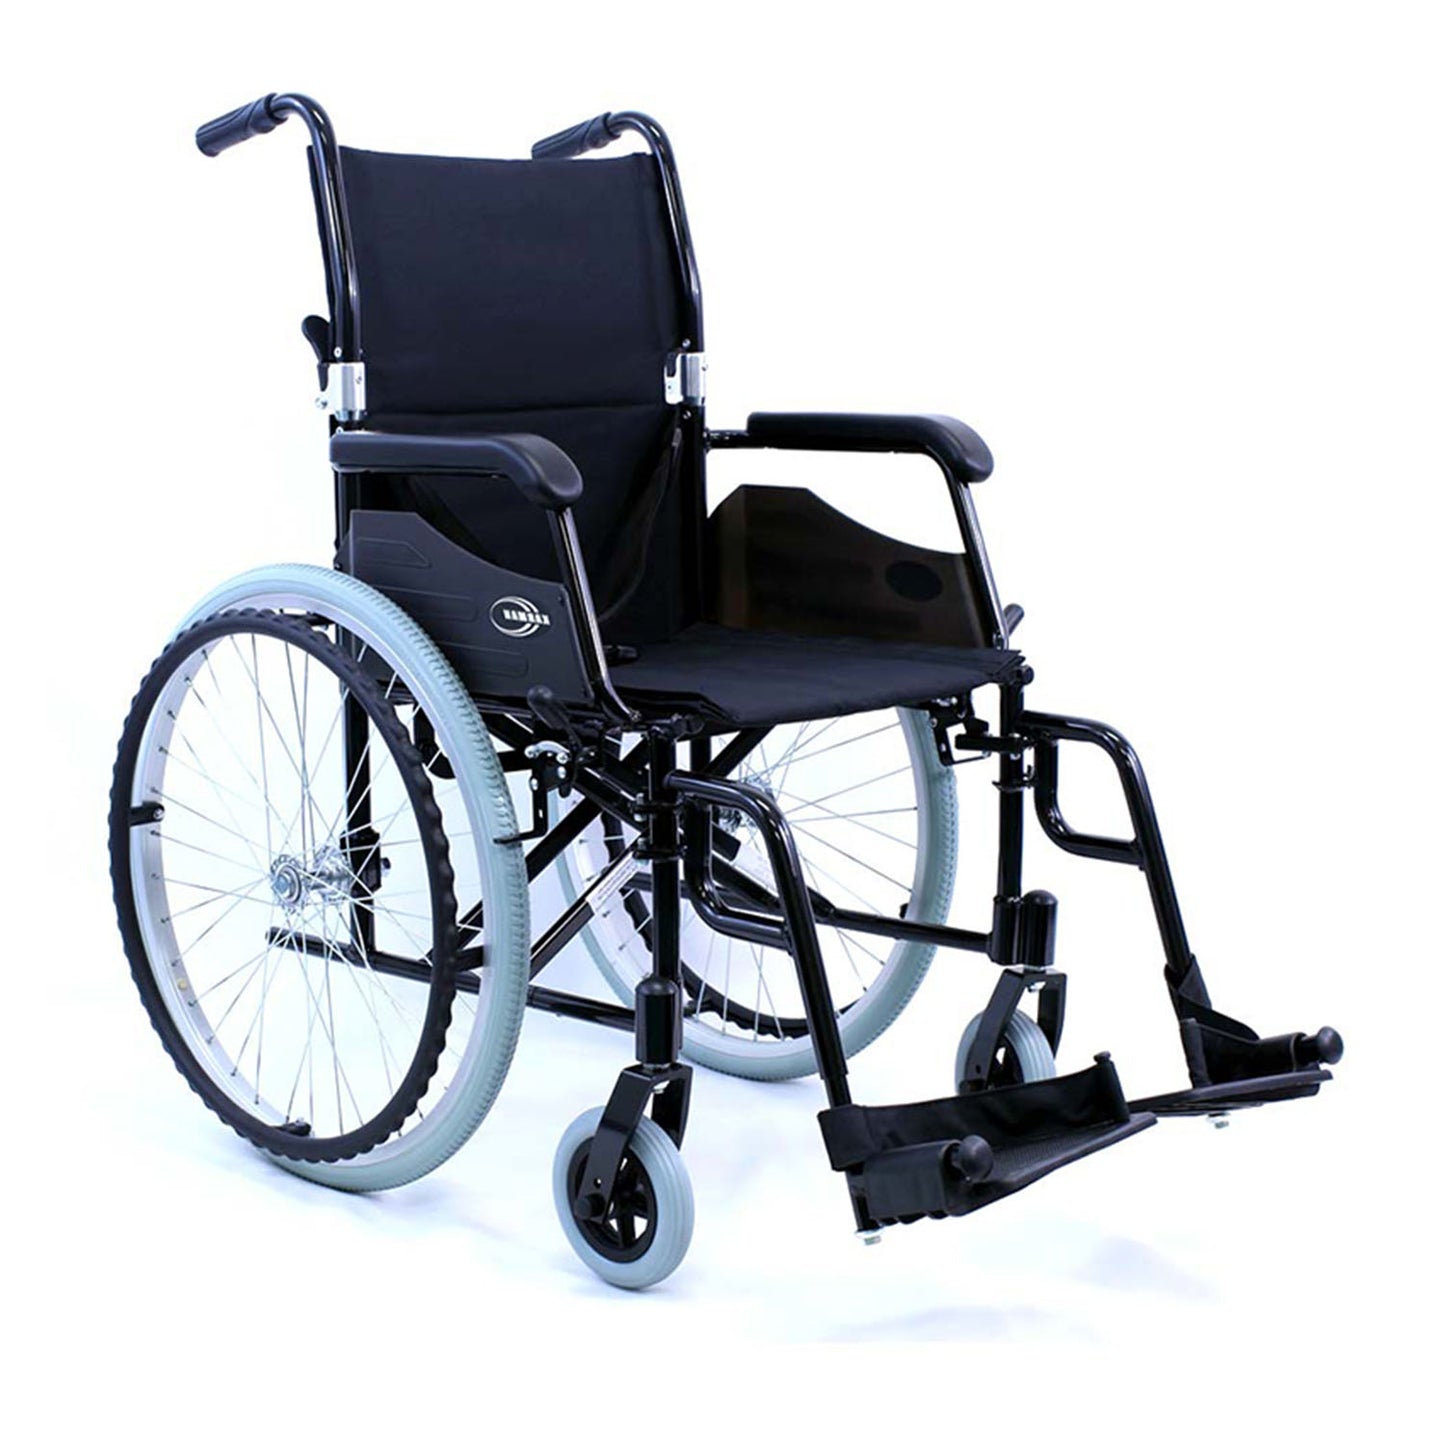 Karman LT-980 18 inch Seat 24 lbs. Ultra Lightweight Wheelchair with Swing Away Footrest in Black